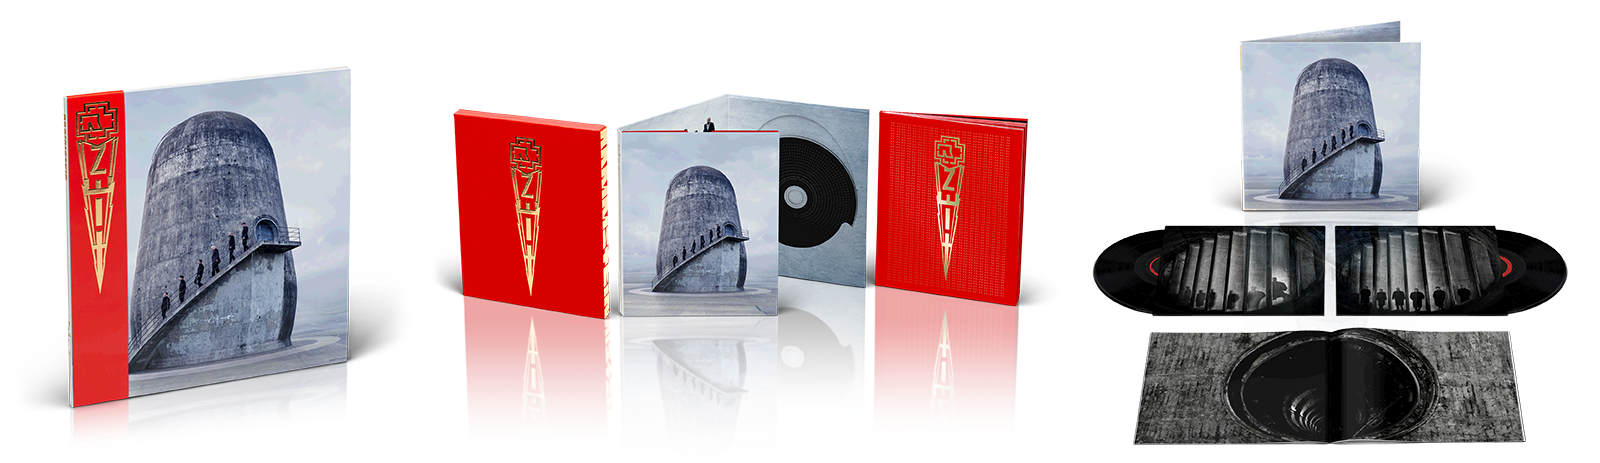 The formats of the album Zeit by Rammstein